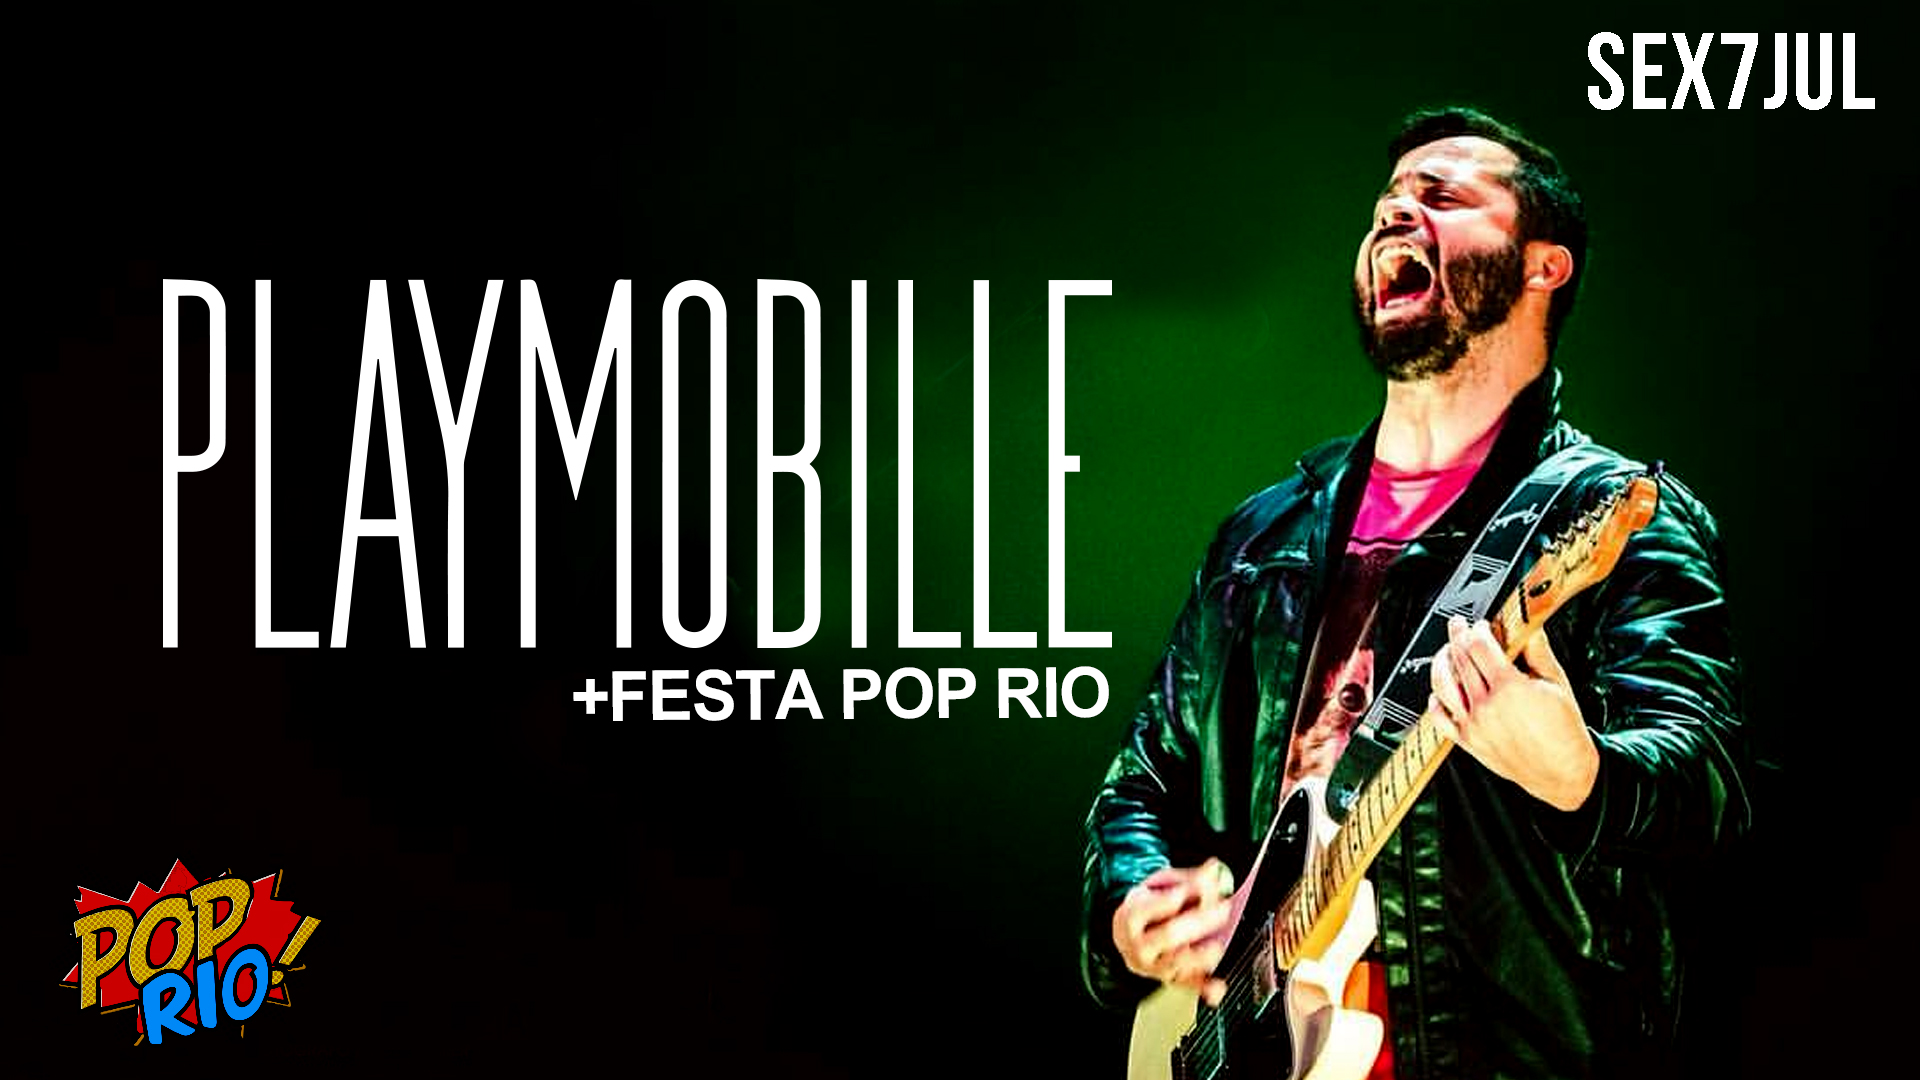 sexta - Playmobille + Festa Pop Rio